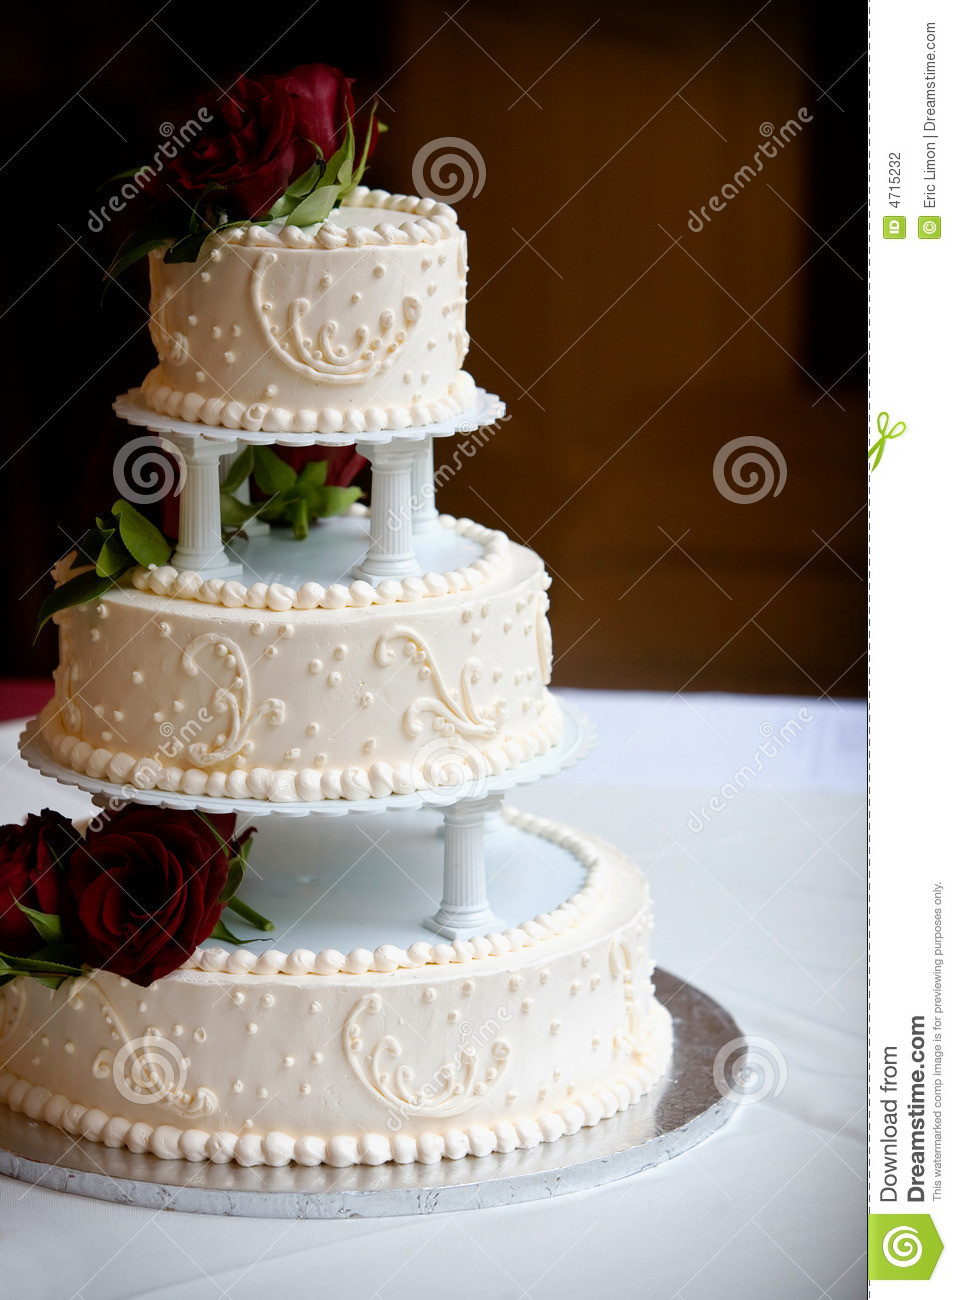 Wedding Tier Cakes
 Wedding Cake With Three Tiers Stock Image of